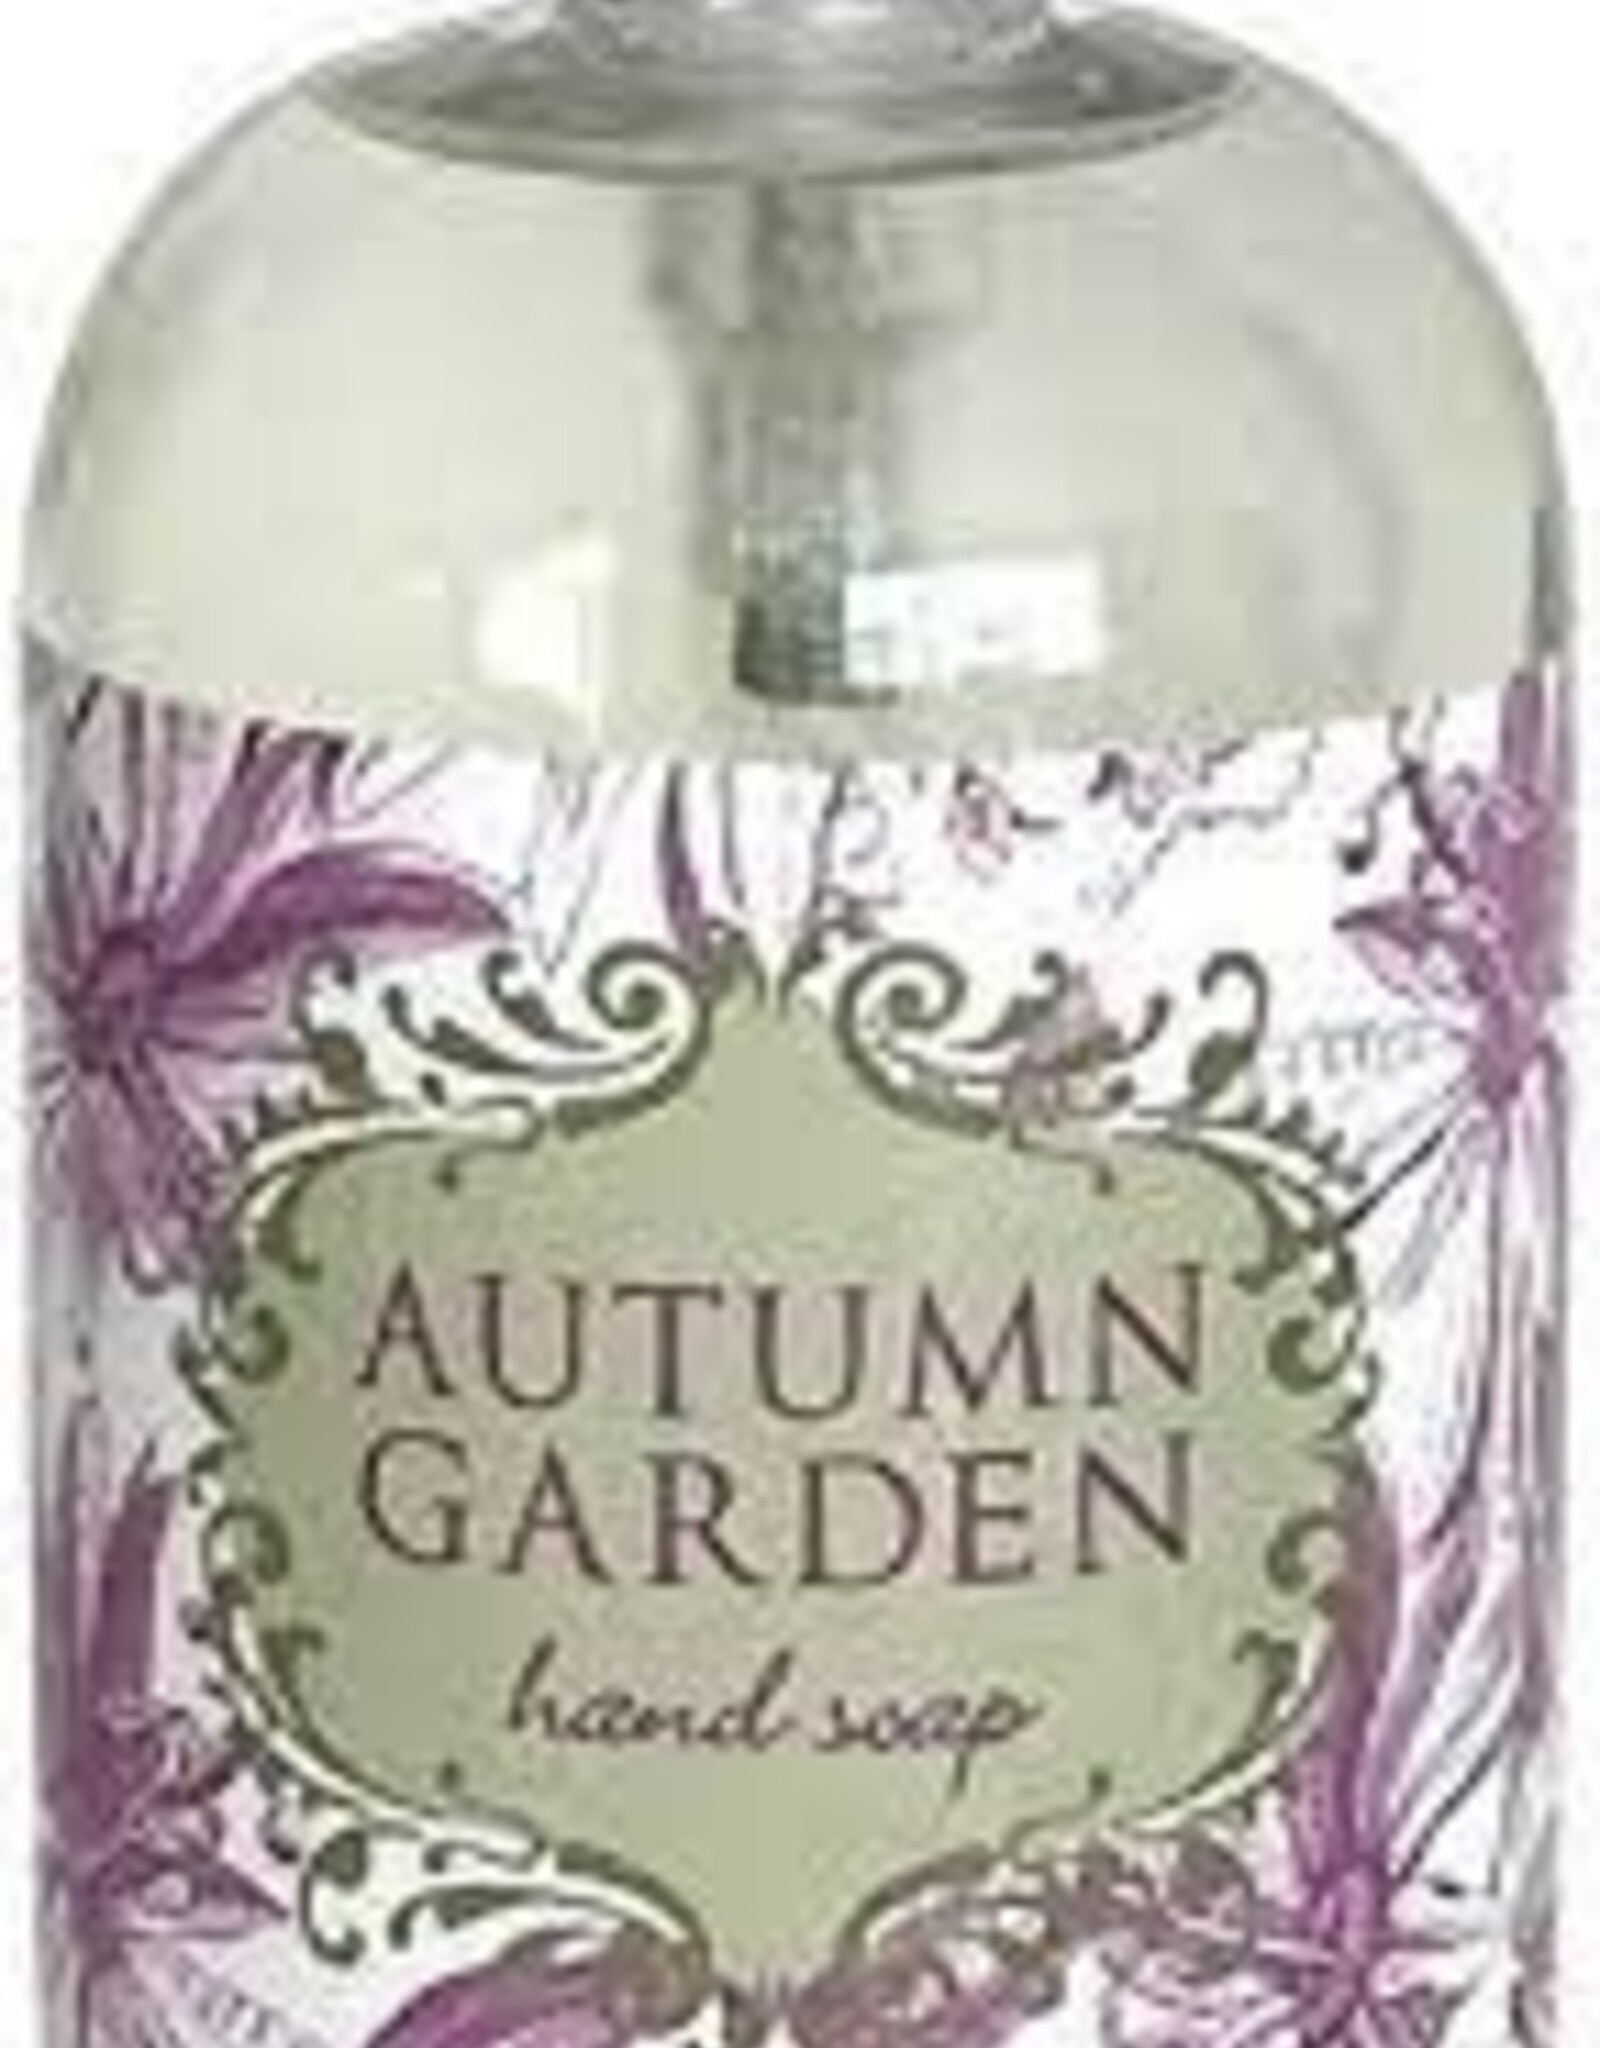 Fall Greenwich Bay - Autumn Garden Hand Soap 16oz